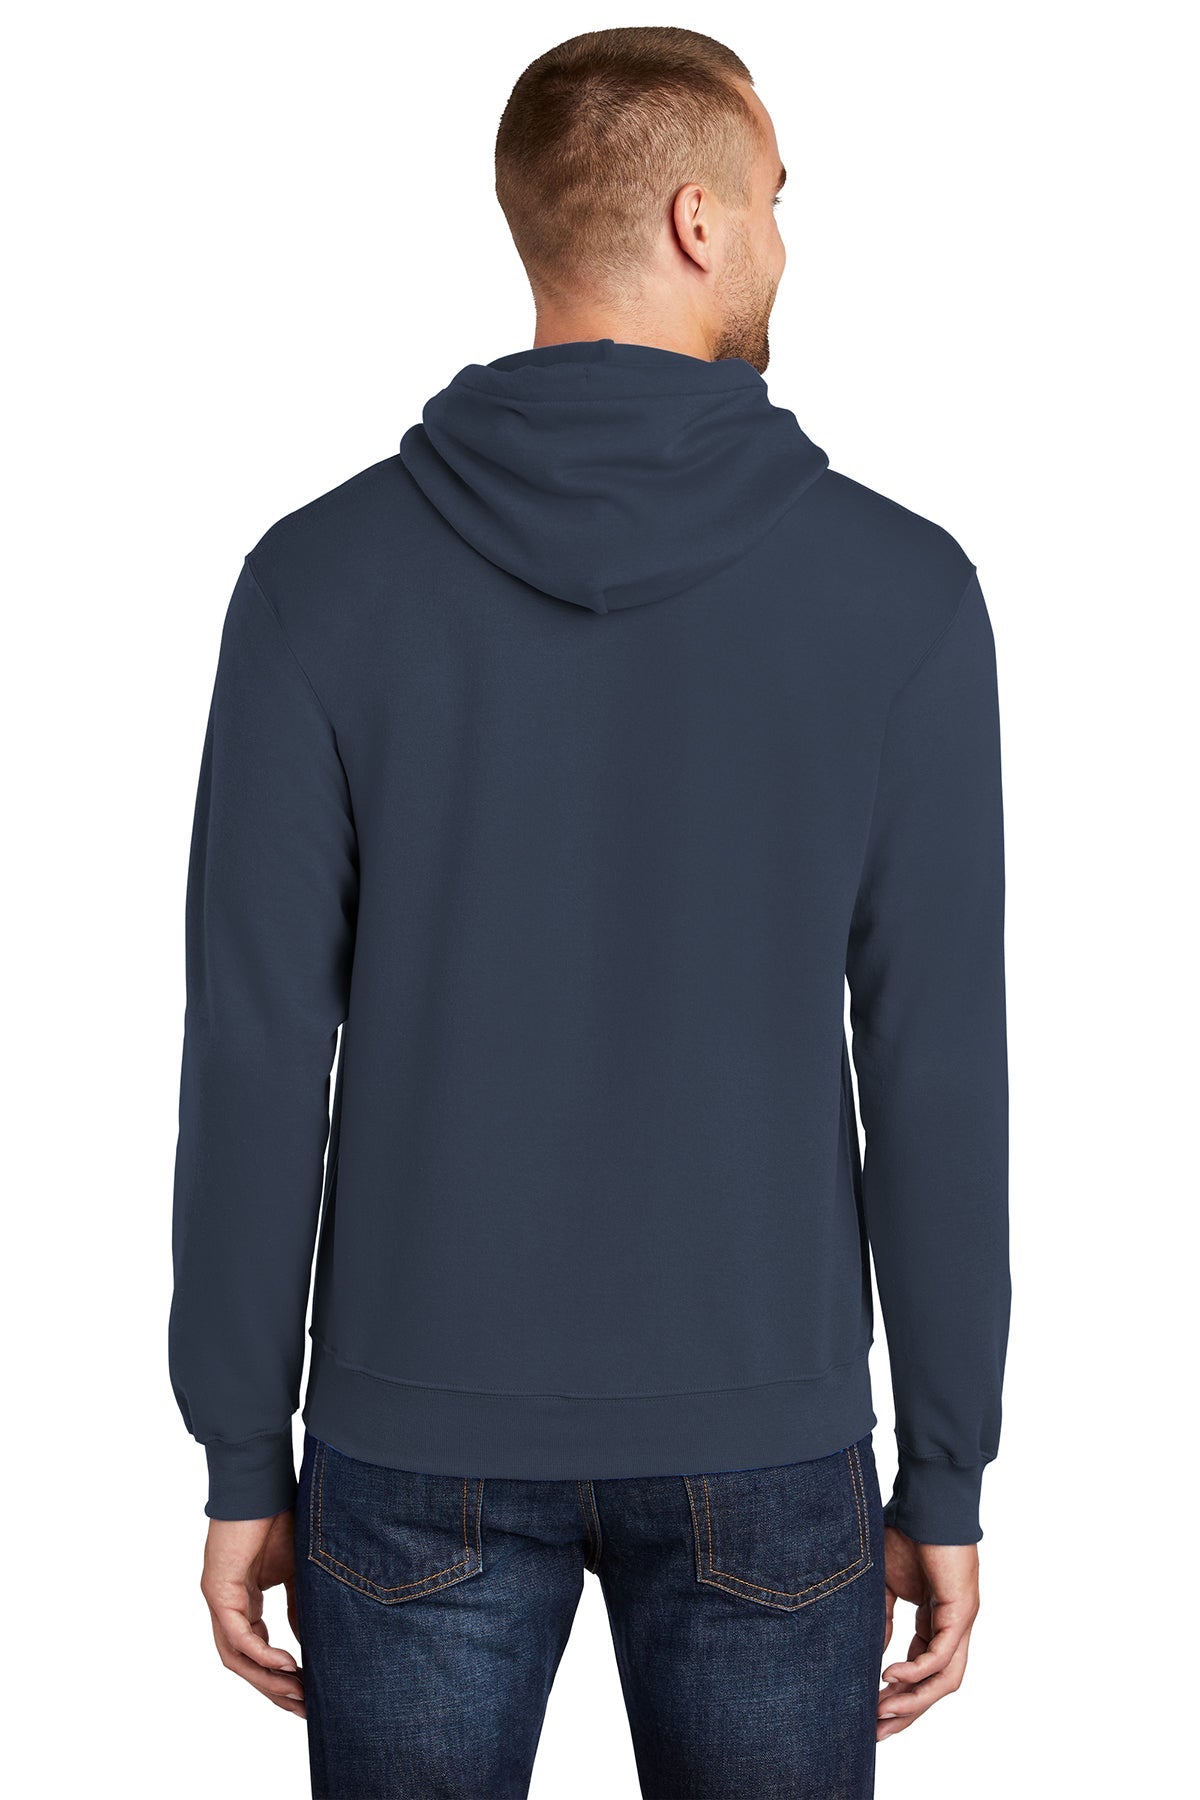 Port & Company Tall Core Fleece Pullover Hooded Sweatshirt PC78HT Navy